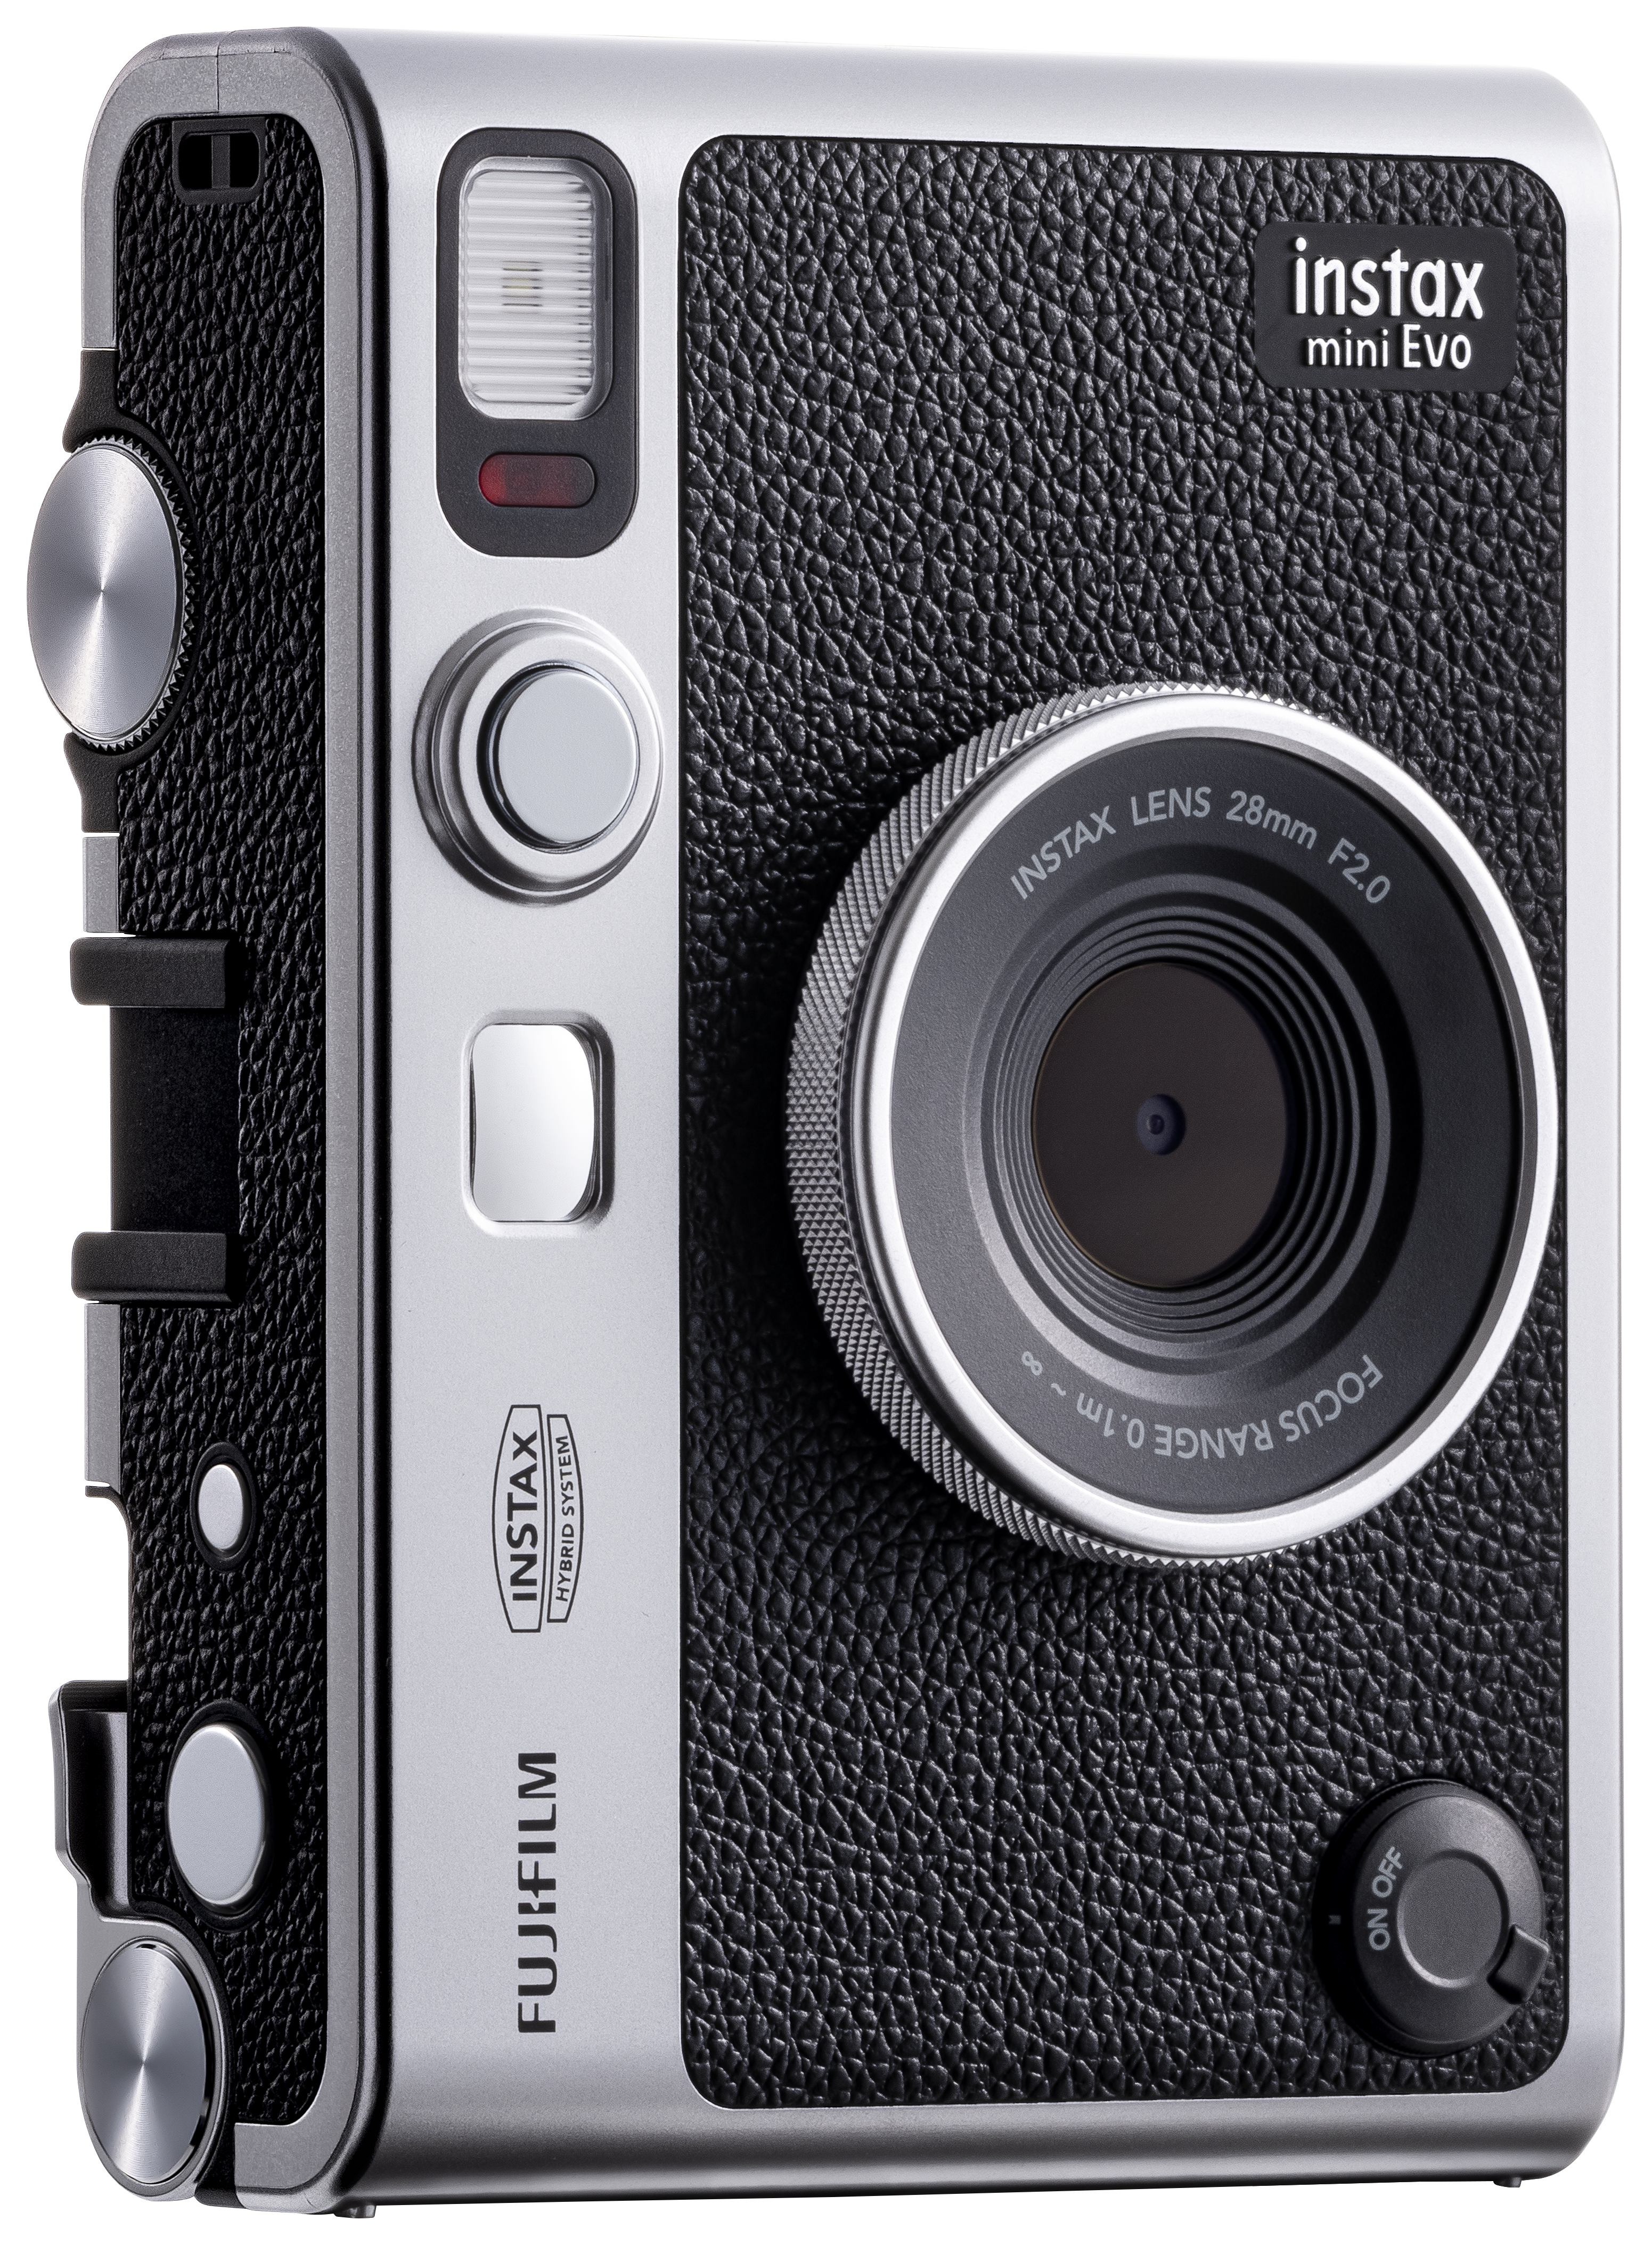 Black FUJIFILM mini Sofortbildkamera, INSTAX Evo